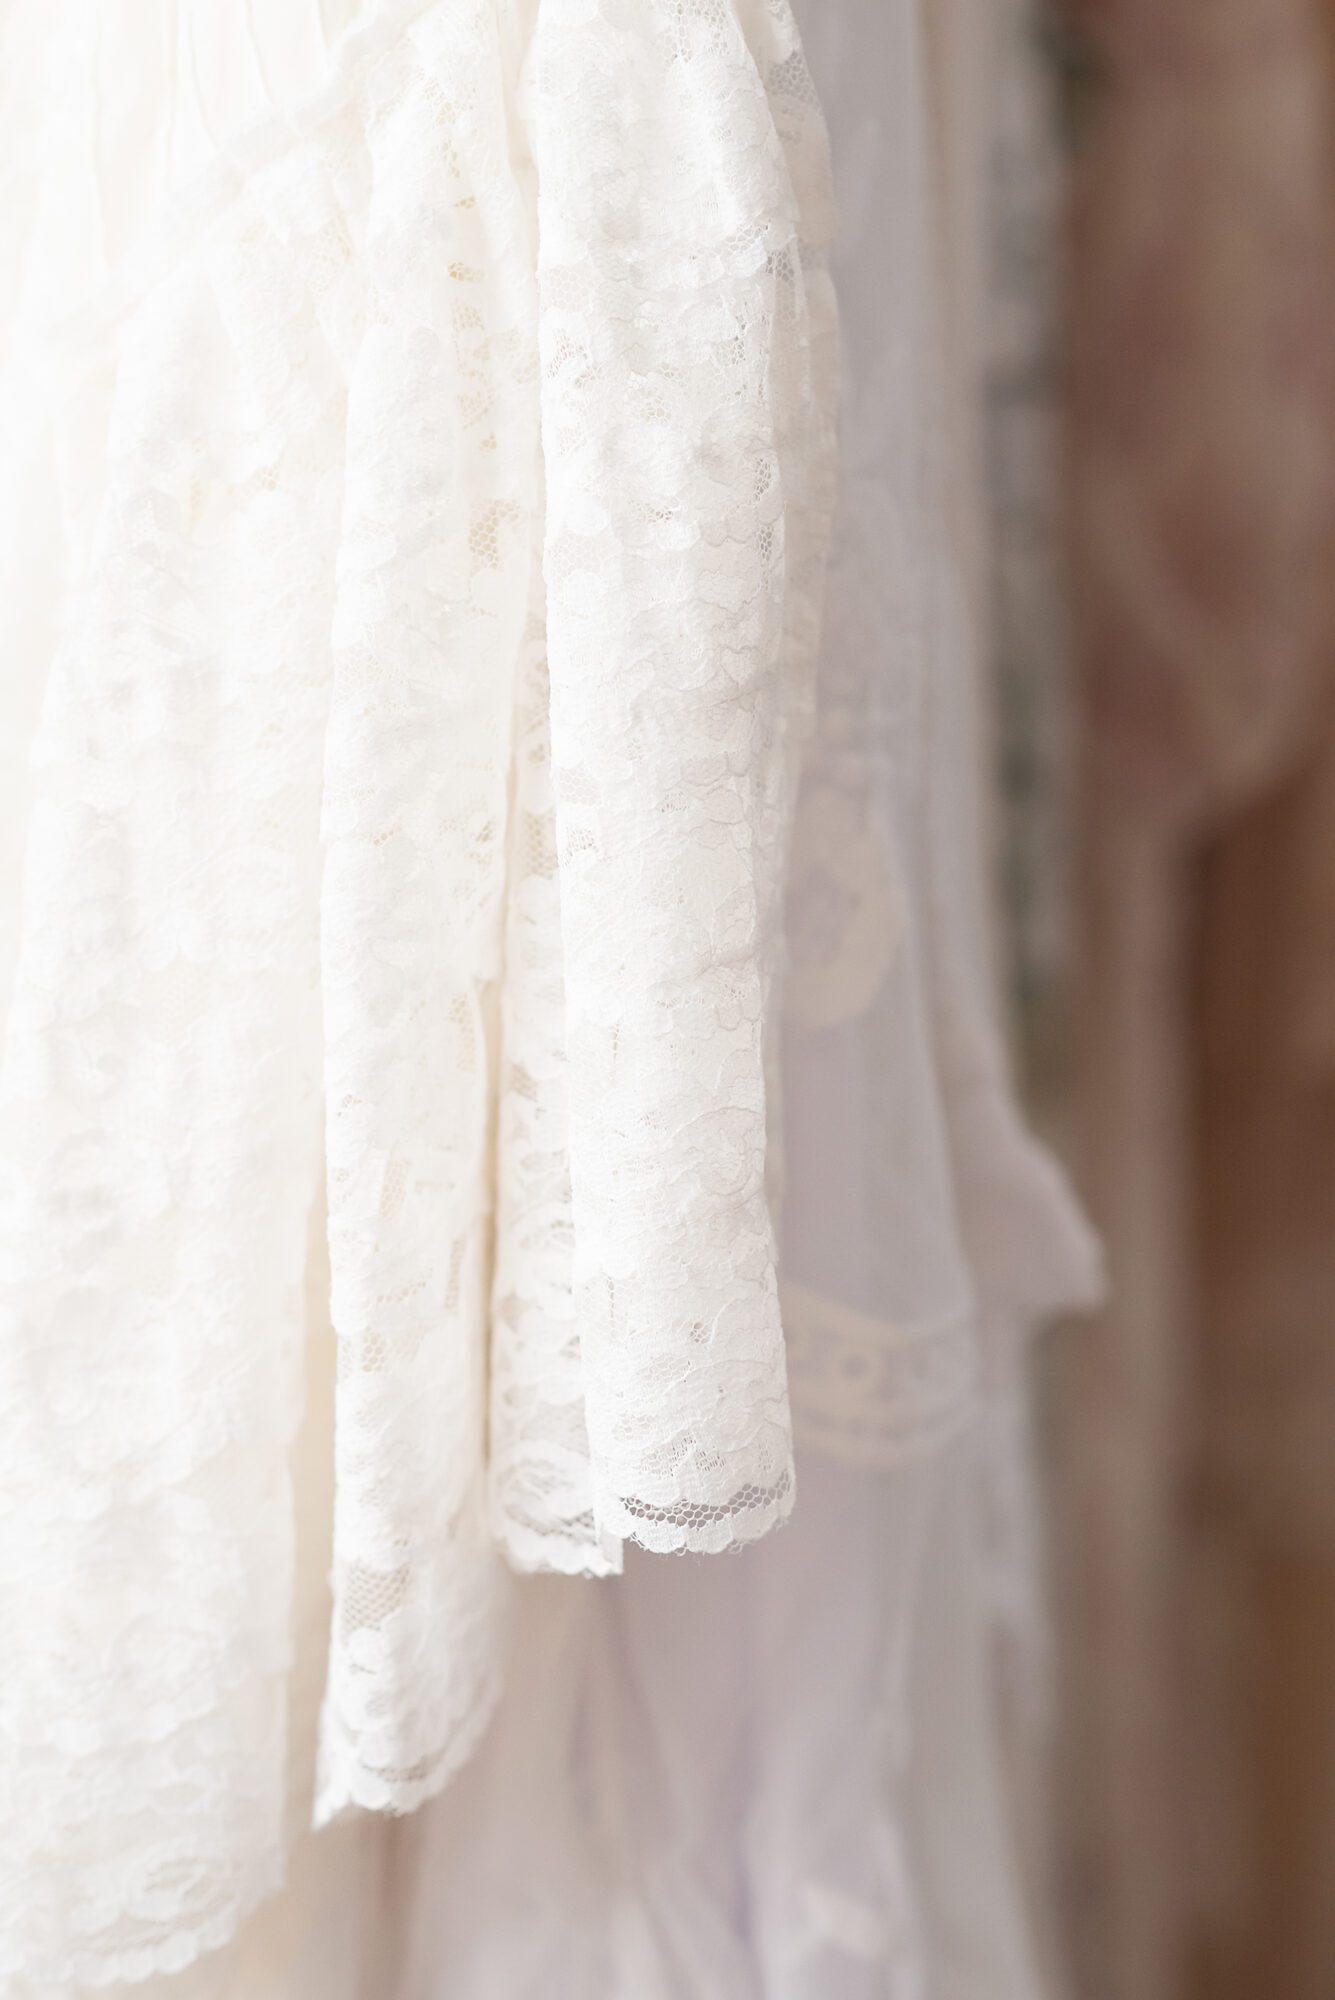 lace dress details | Reaj Roberts Photography